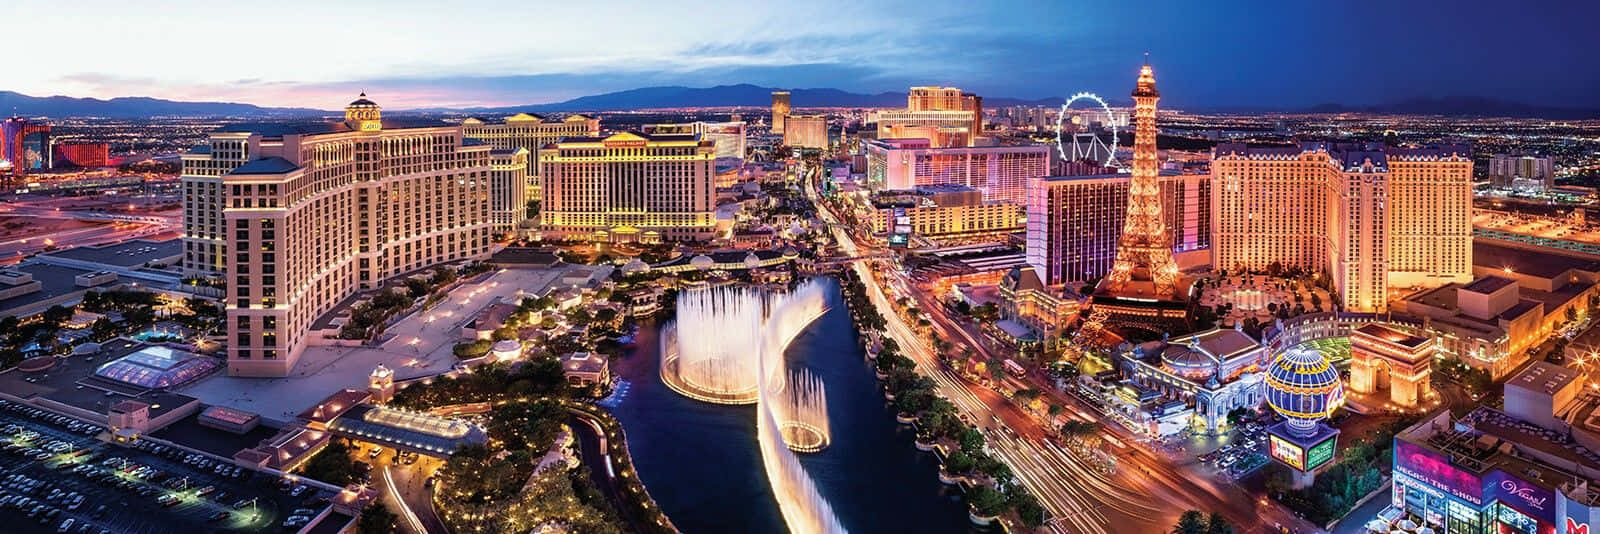 Las Vegas Hotels And Resorts Wallpaper